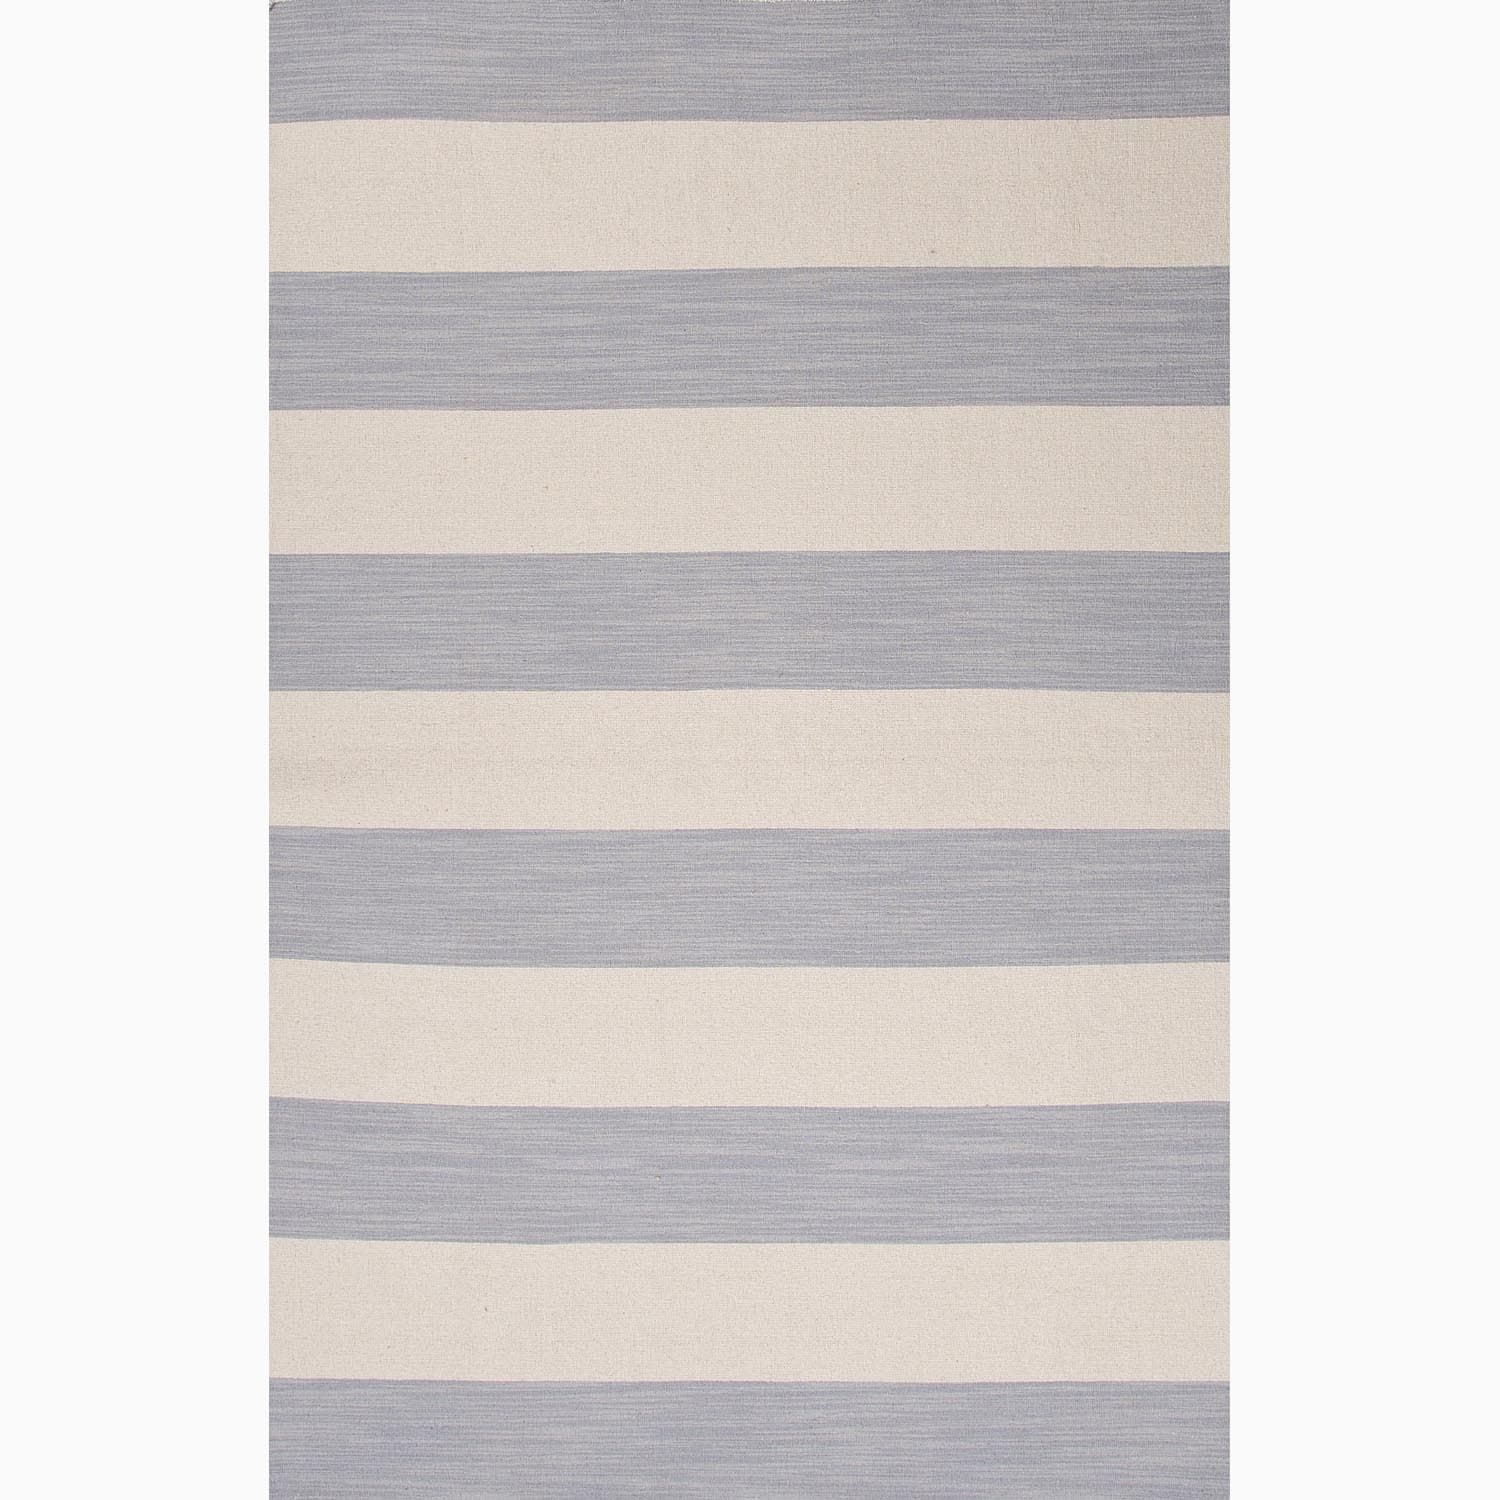 Hand made Stripe Pattern Gray/ Ivory Wool Rug (4x6)